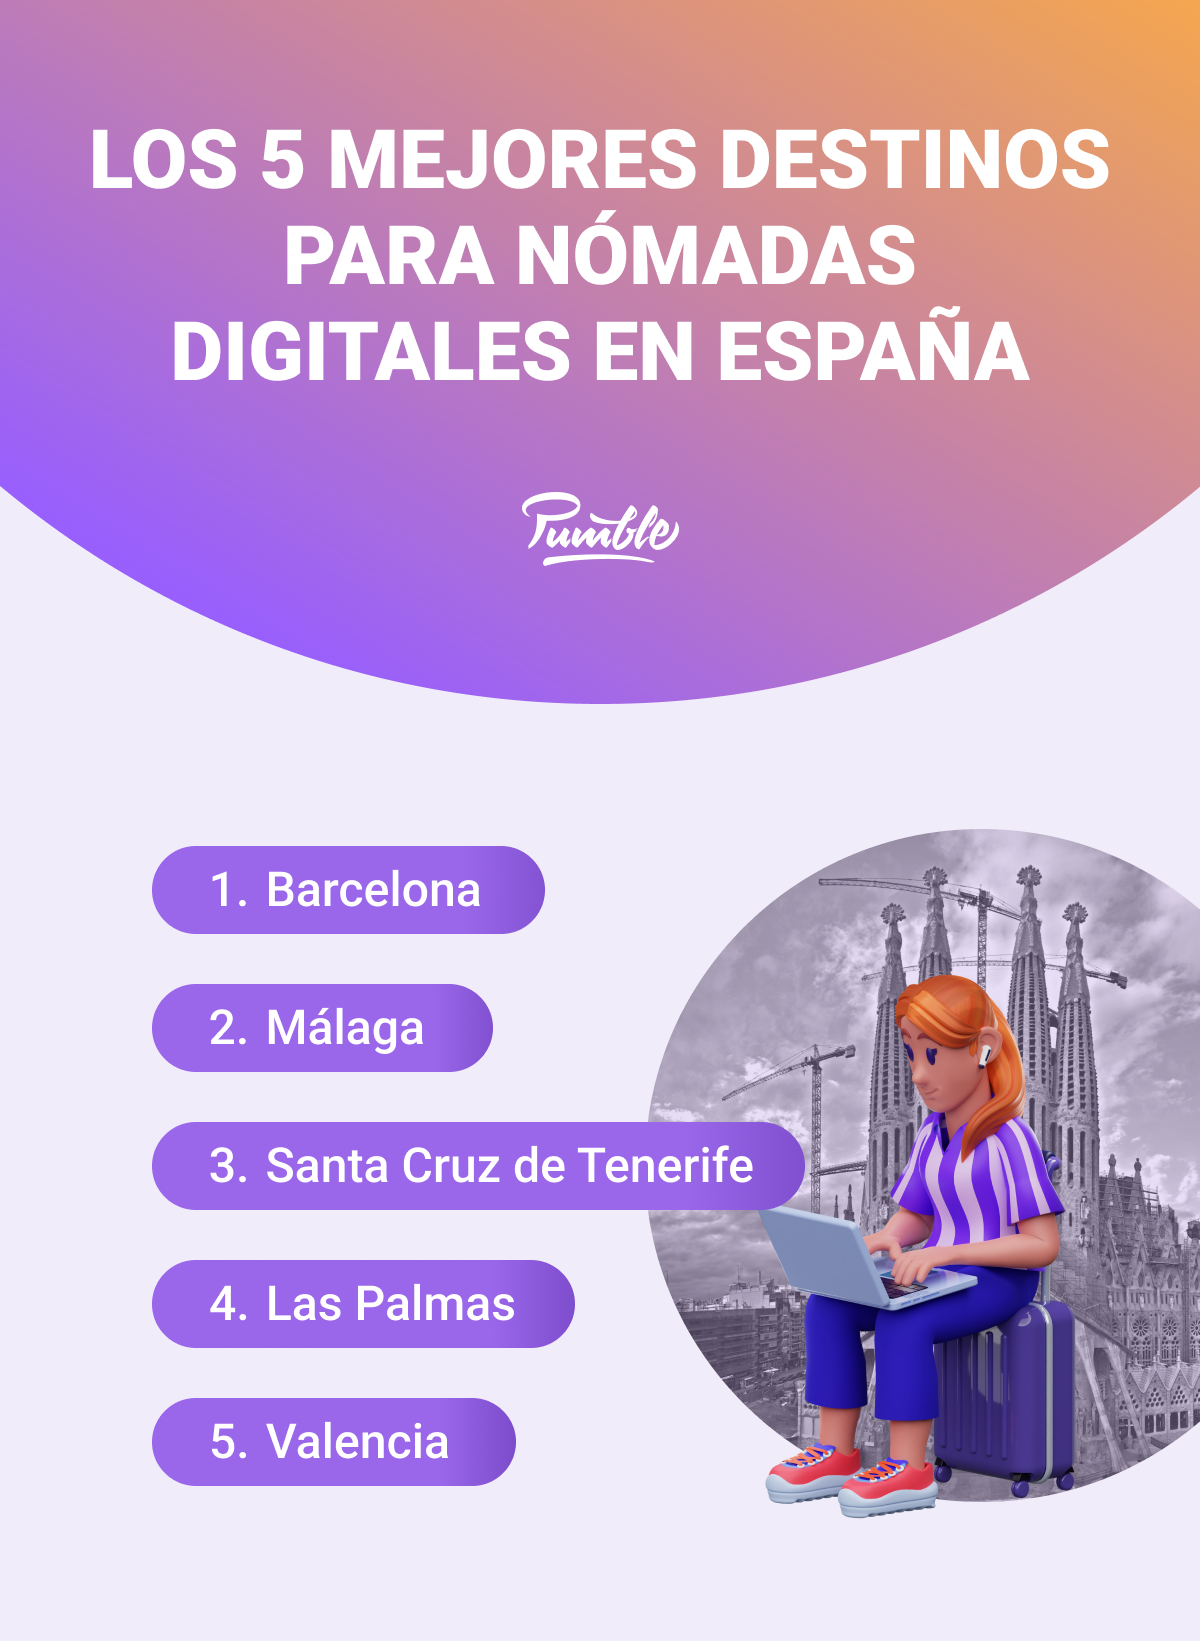 Top 5 destinations for digital nomads in Spain